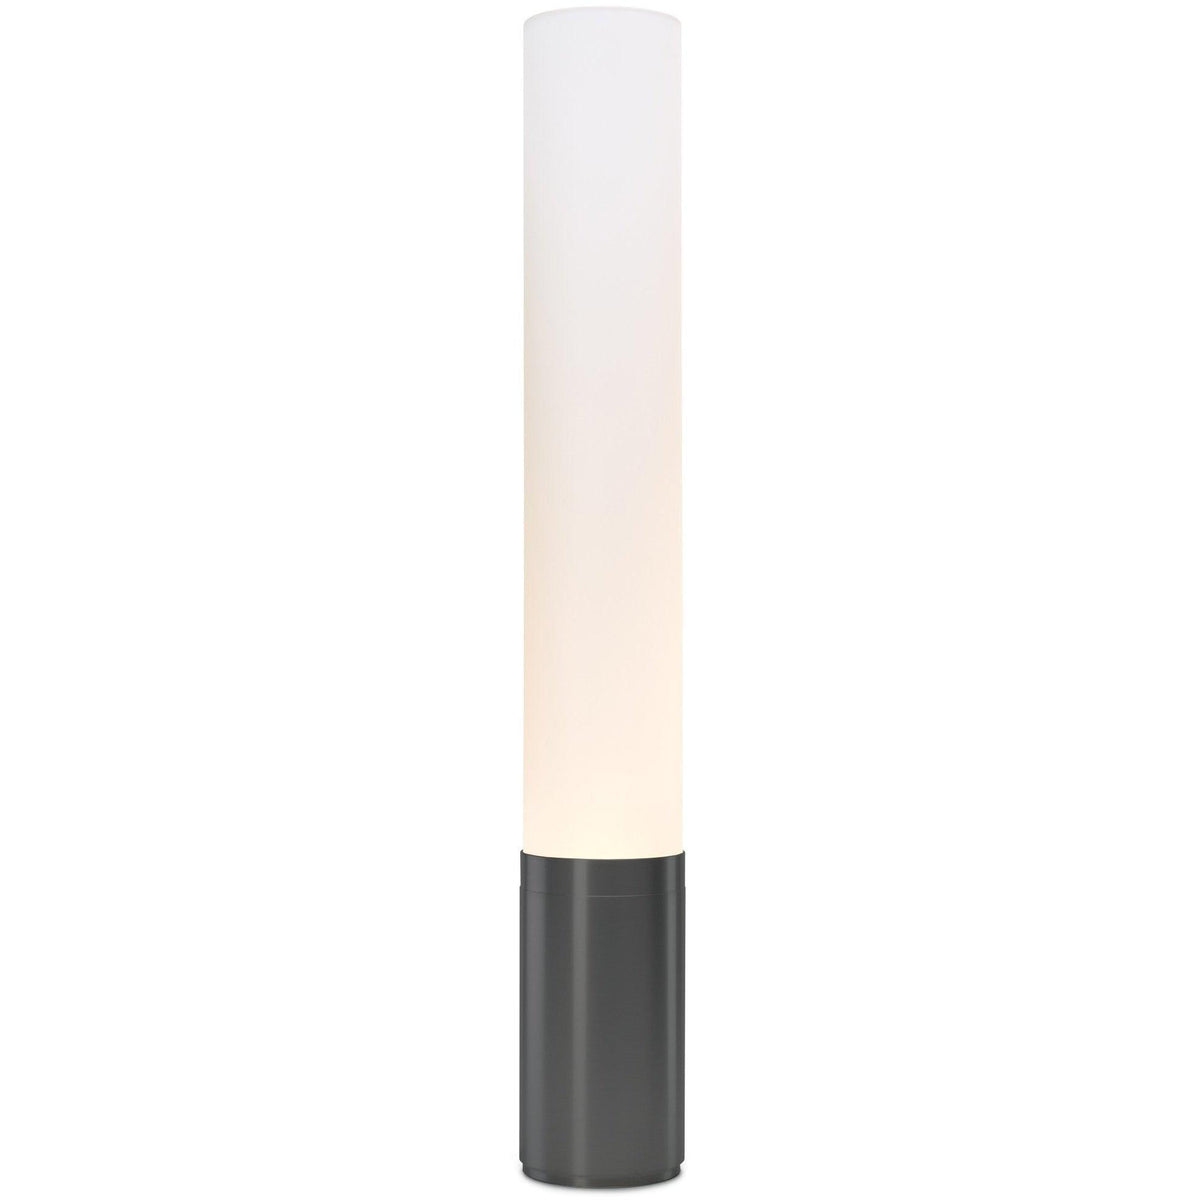 Pablo Designs - Elise Floor Lamp - ELIS 32 BLK | Montreal Lighting & Hardware